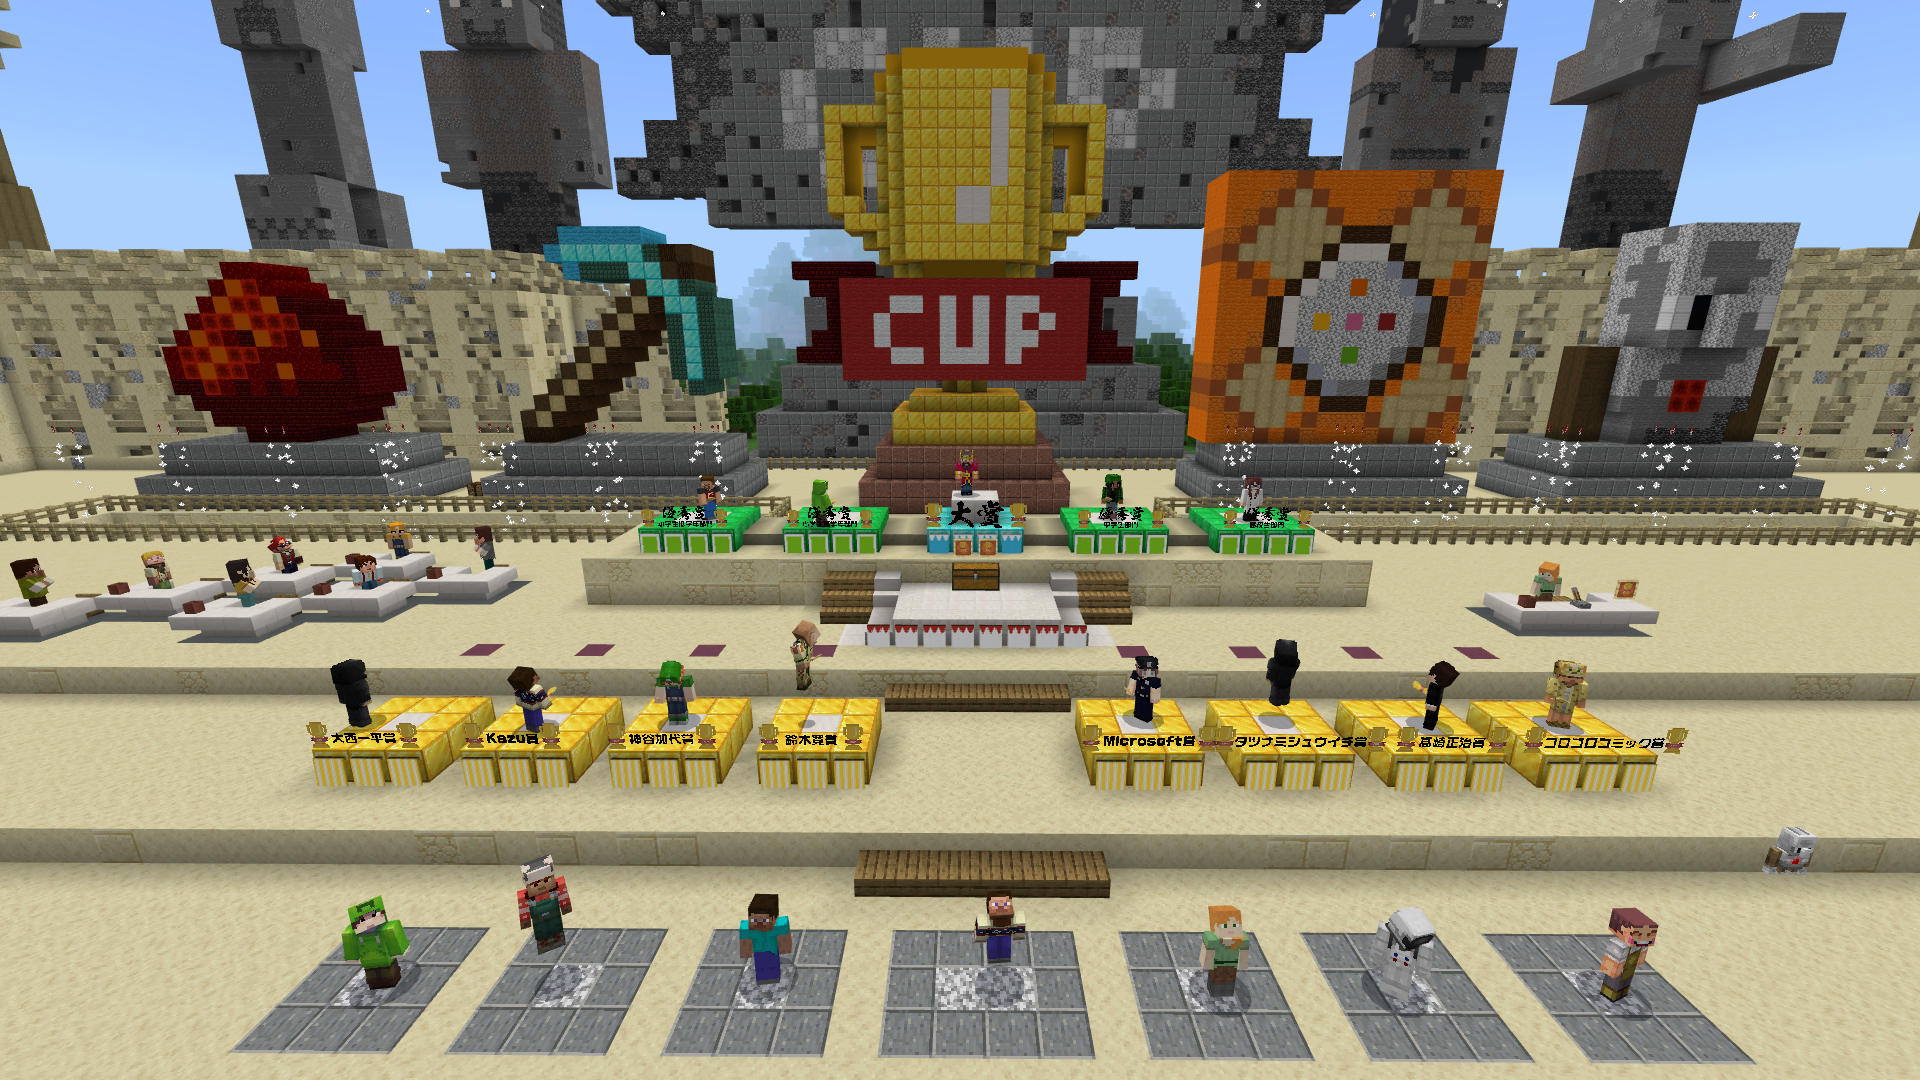 Minecraftカップ全国大会 未来の学校 をマイクラ 上で発表 全13作品のawardが決定 Minecraftカップ全国大会運営委員会のプレスリリース